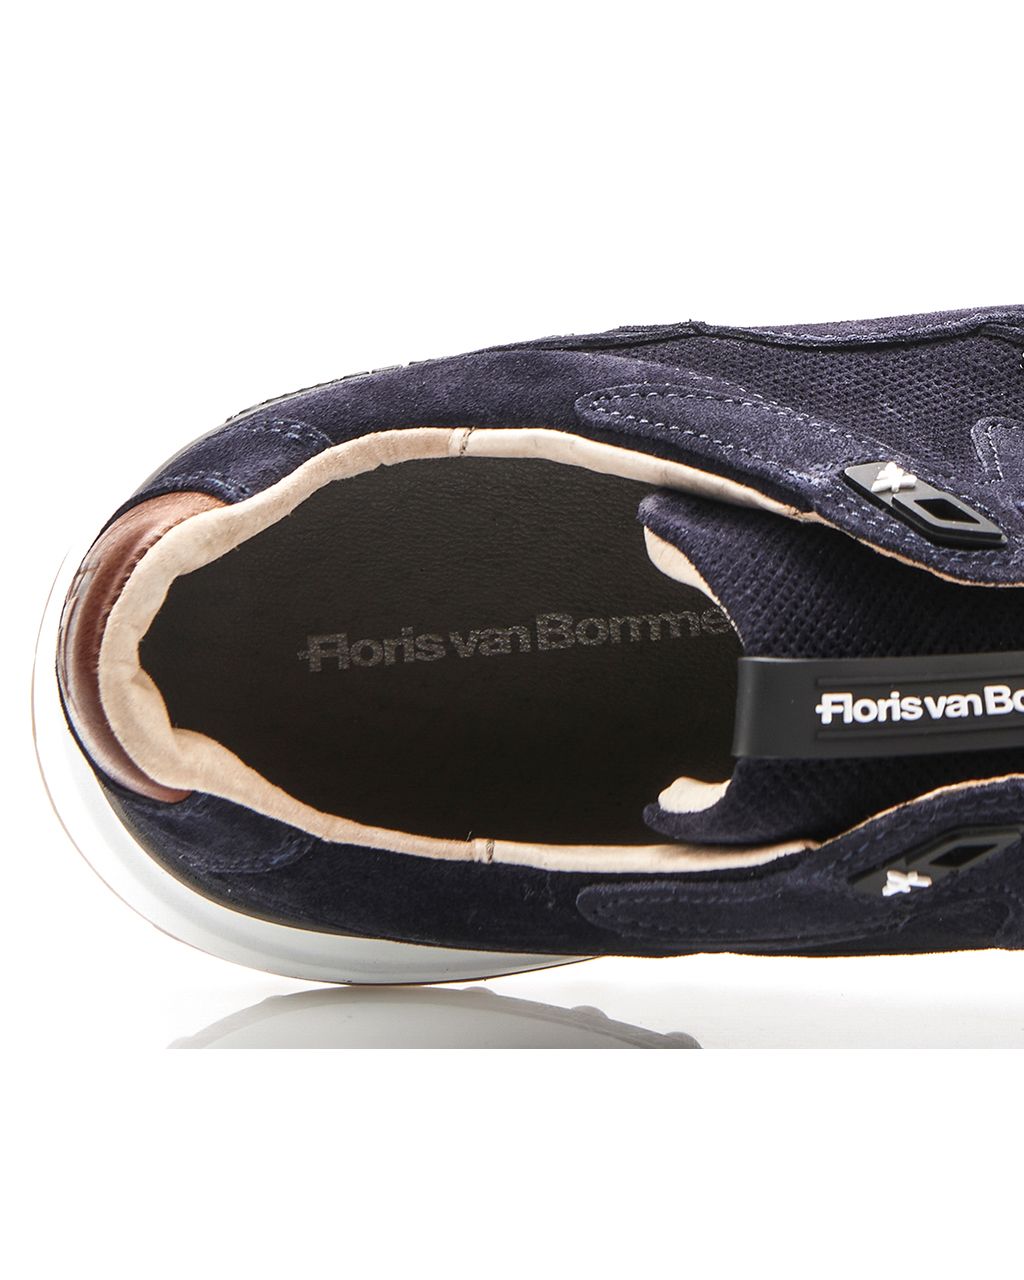 Floris van Bommel Sneakers Donker blauw 075985-001-10